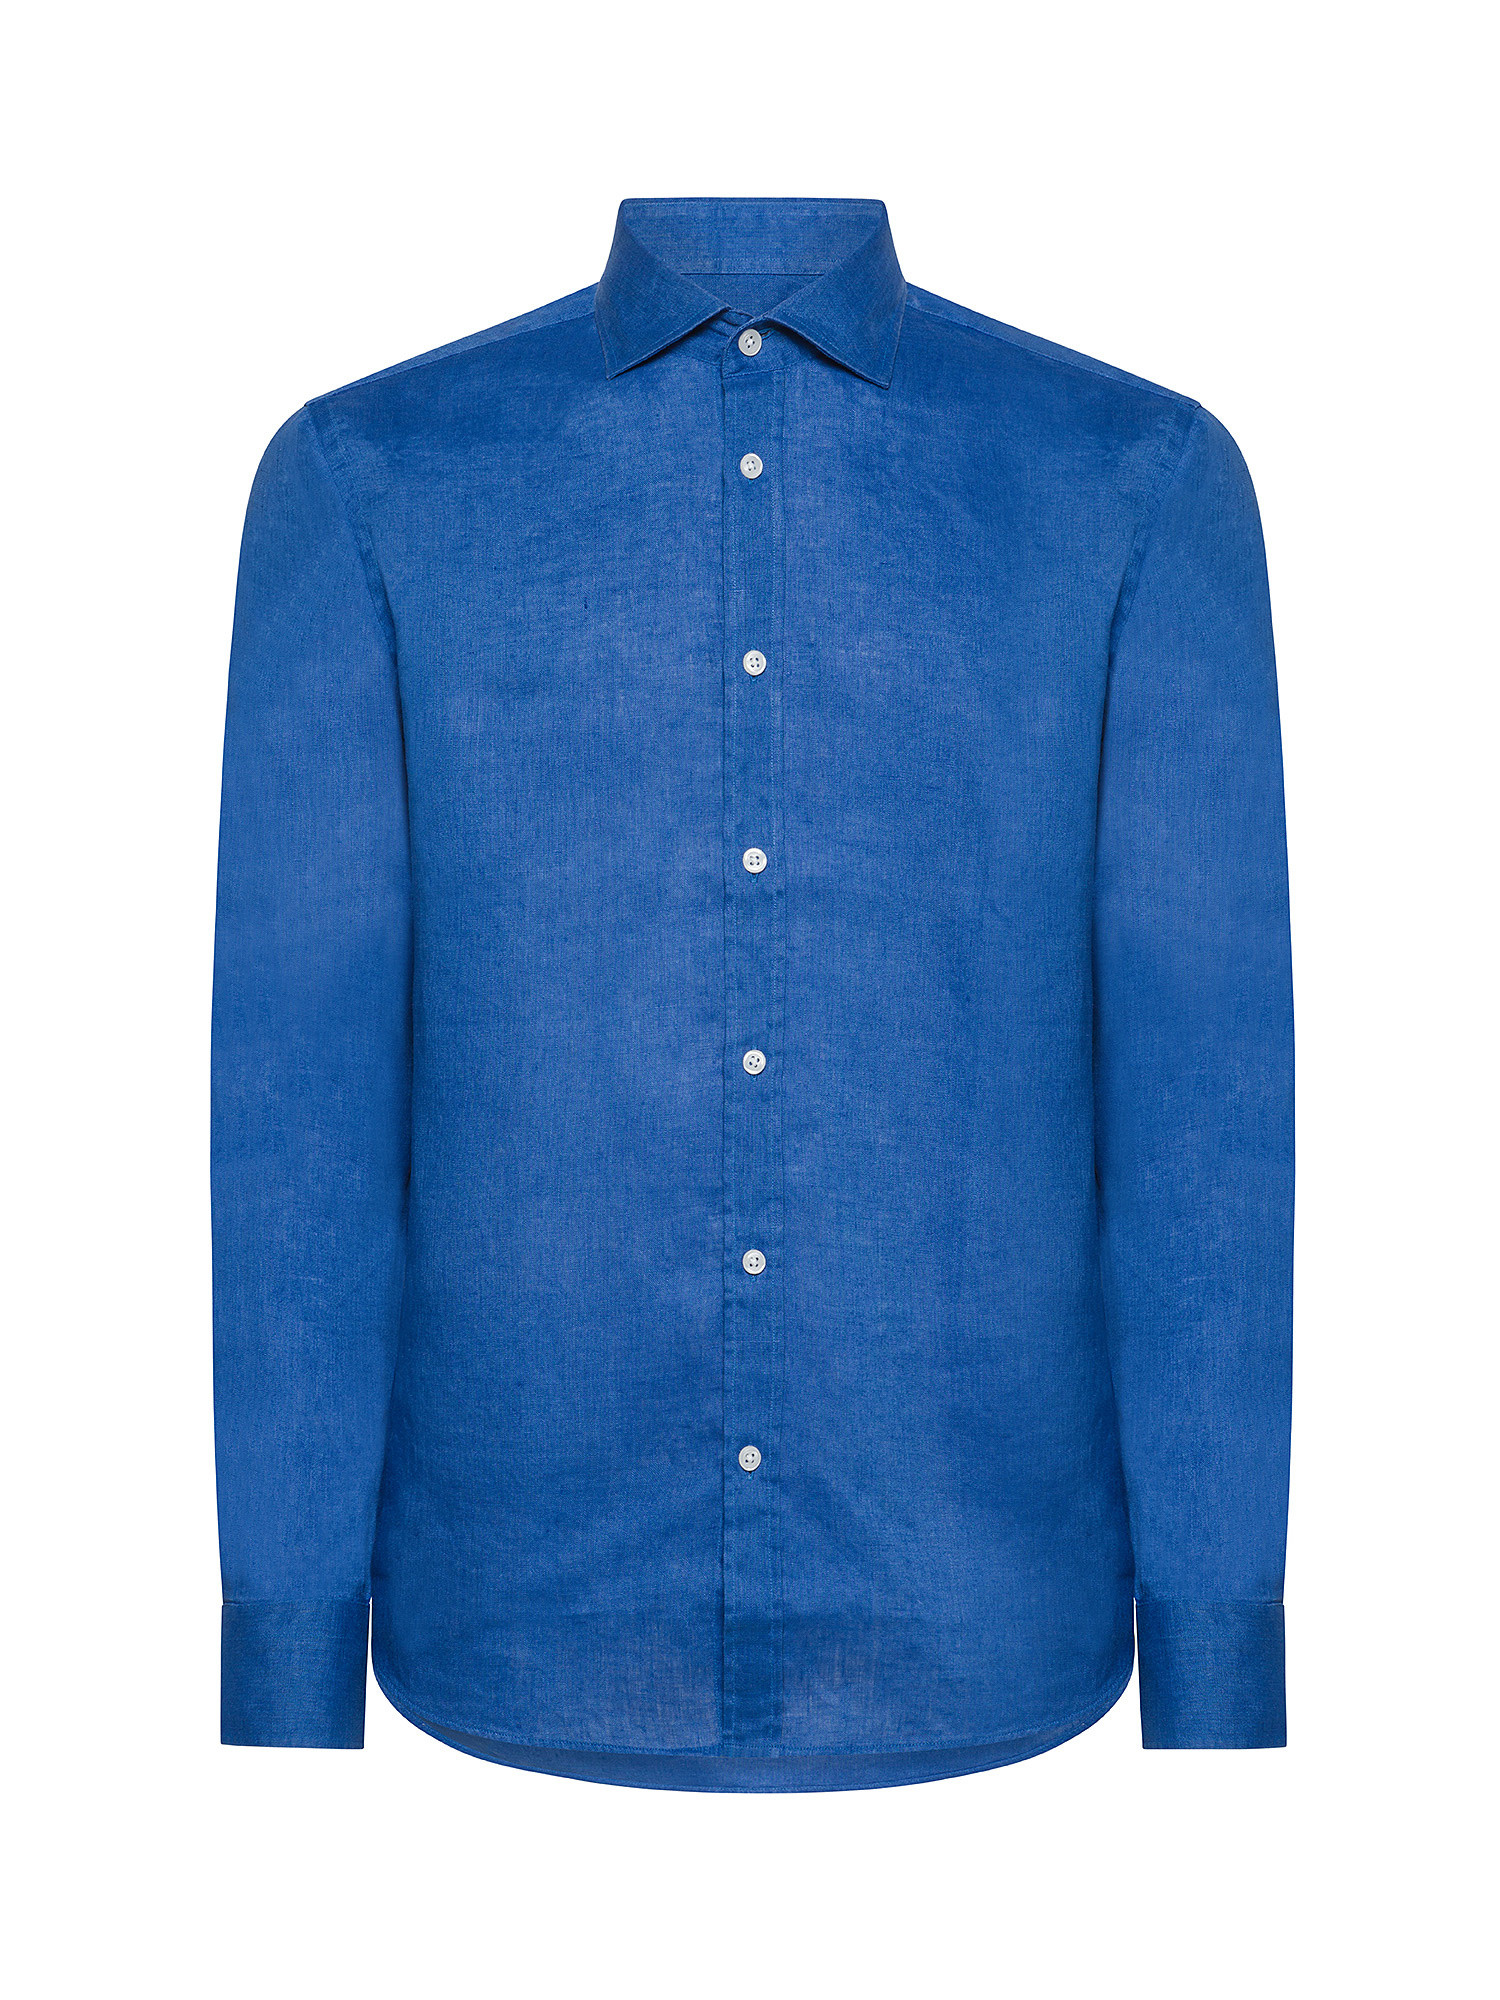 Luca D'Altieri - Tailor fit shirt in pure linen, Blue Cornflower, large image number 0